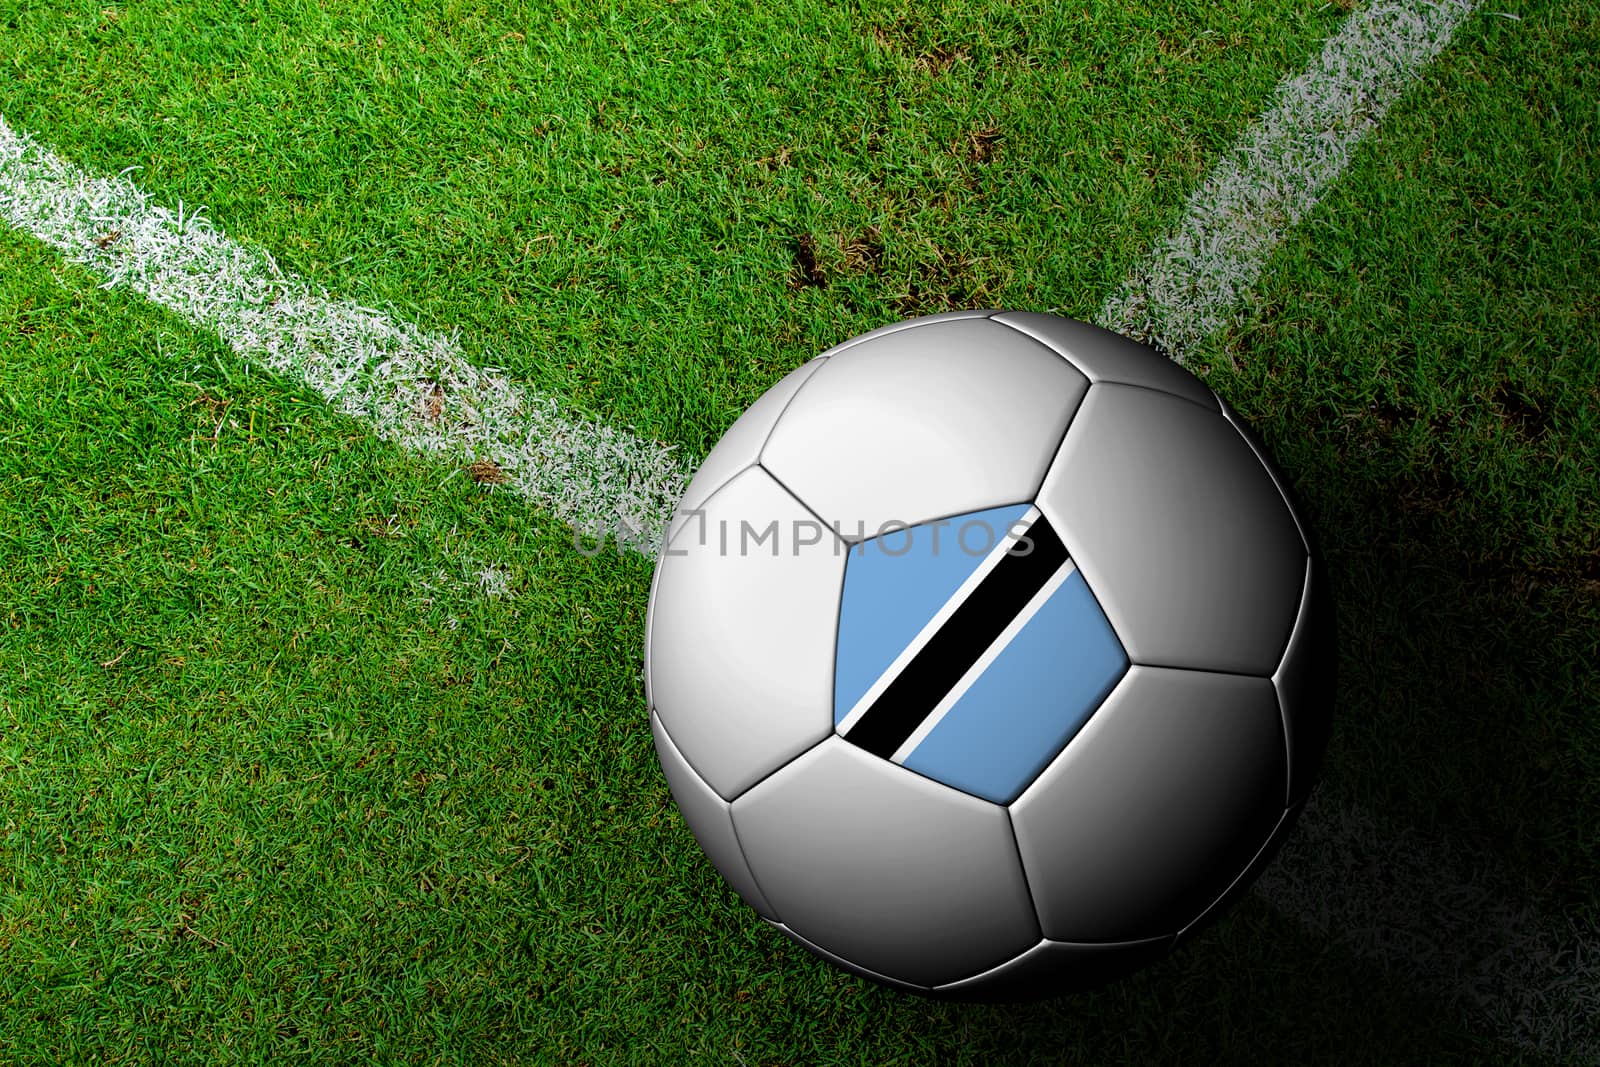 Botswana Flag Pattern of a soccer ball in green grass